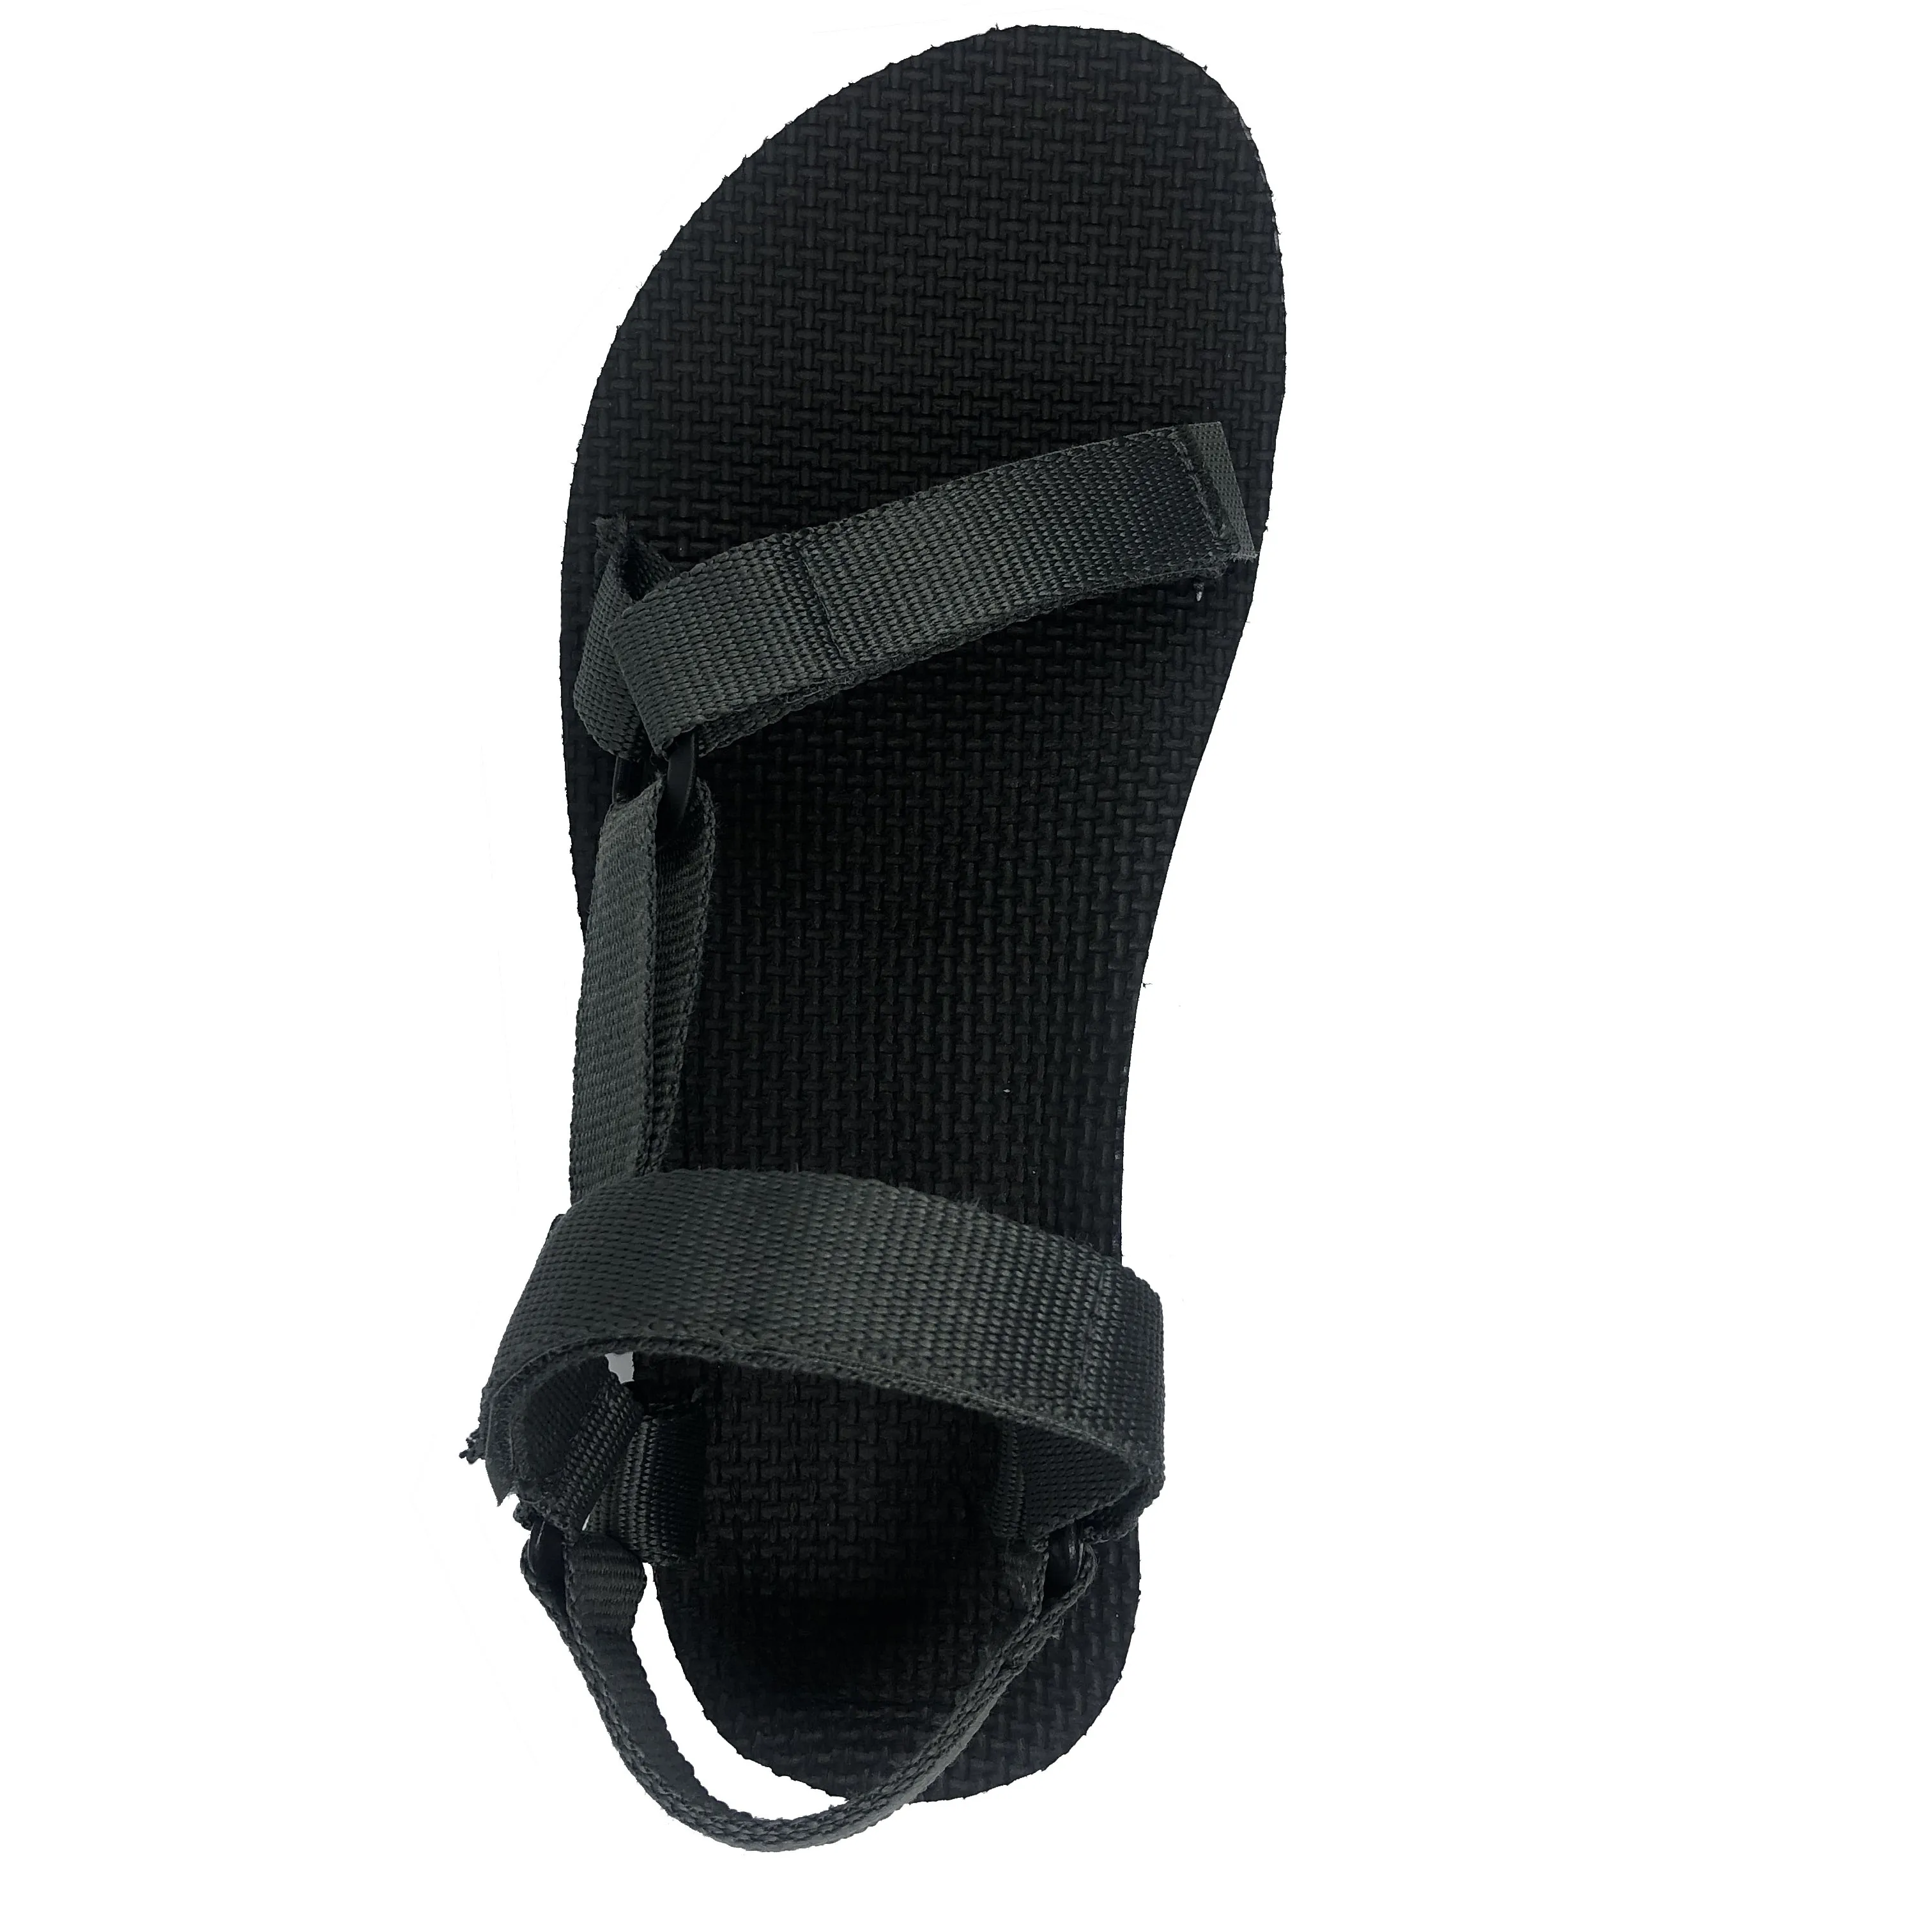 Latest Summer Leisure Adjustable Strap Sandals Men Wholesale Breathable ...